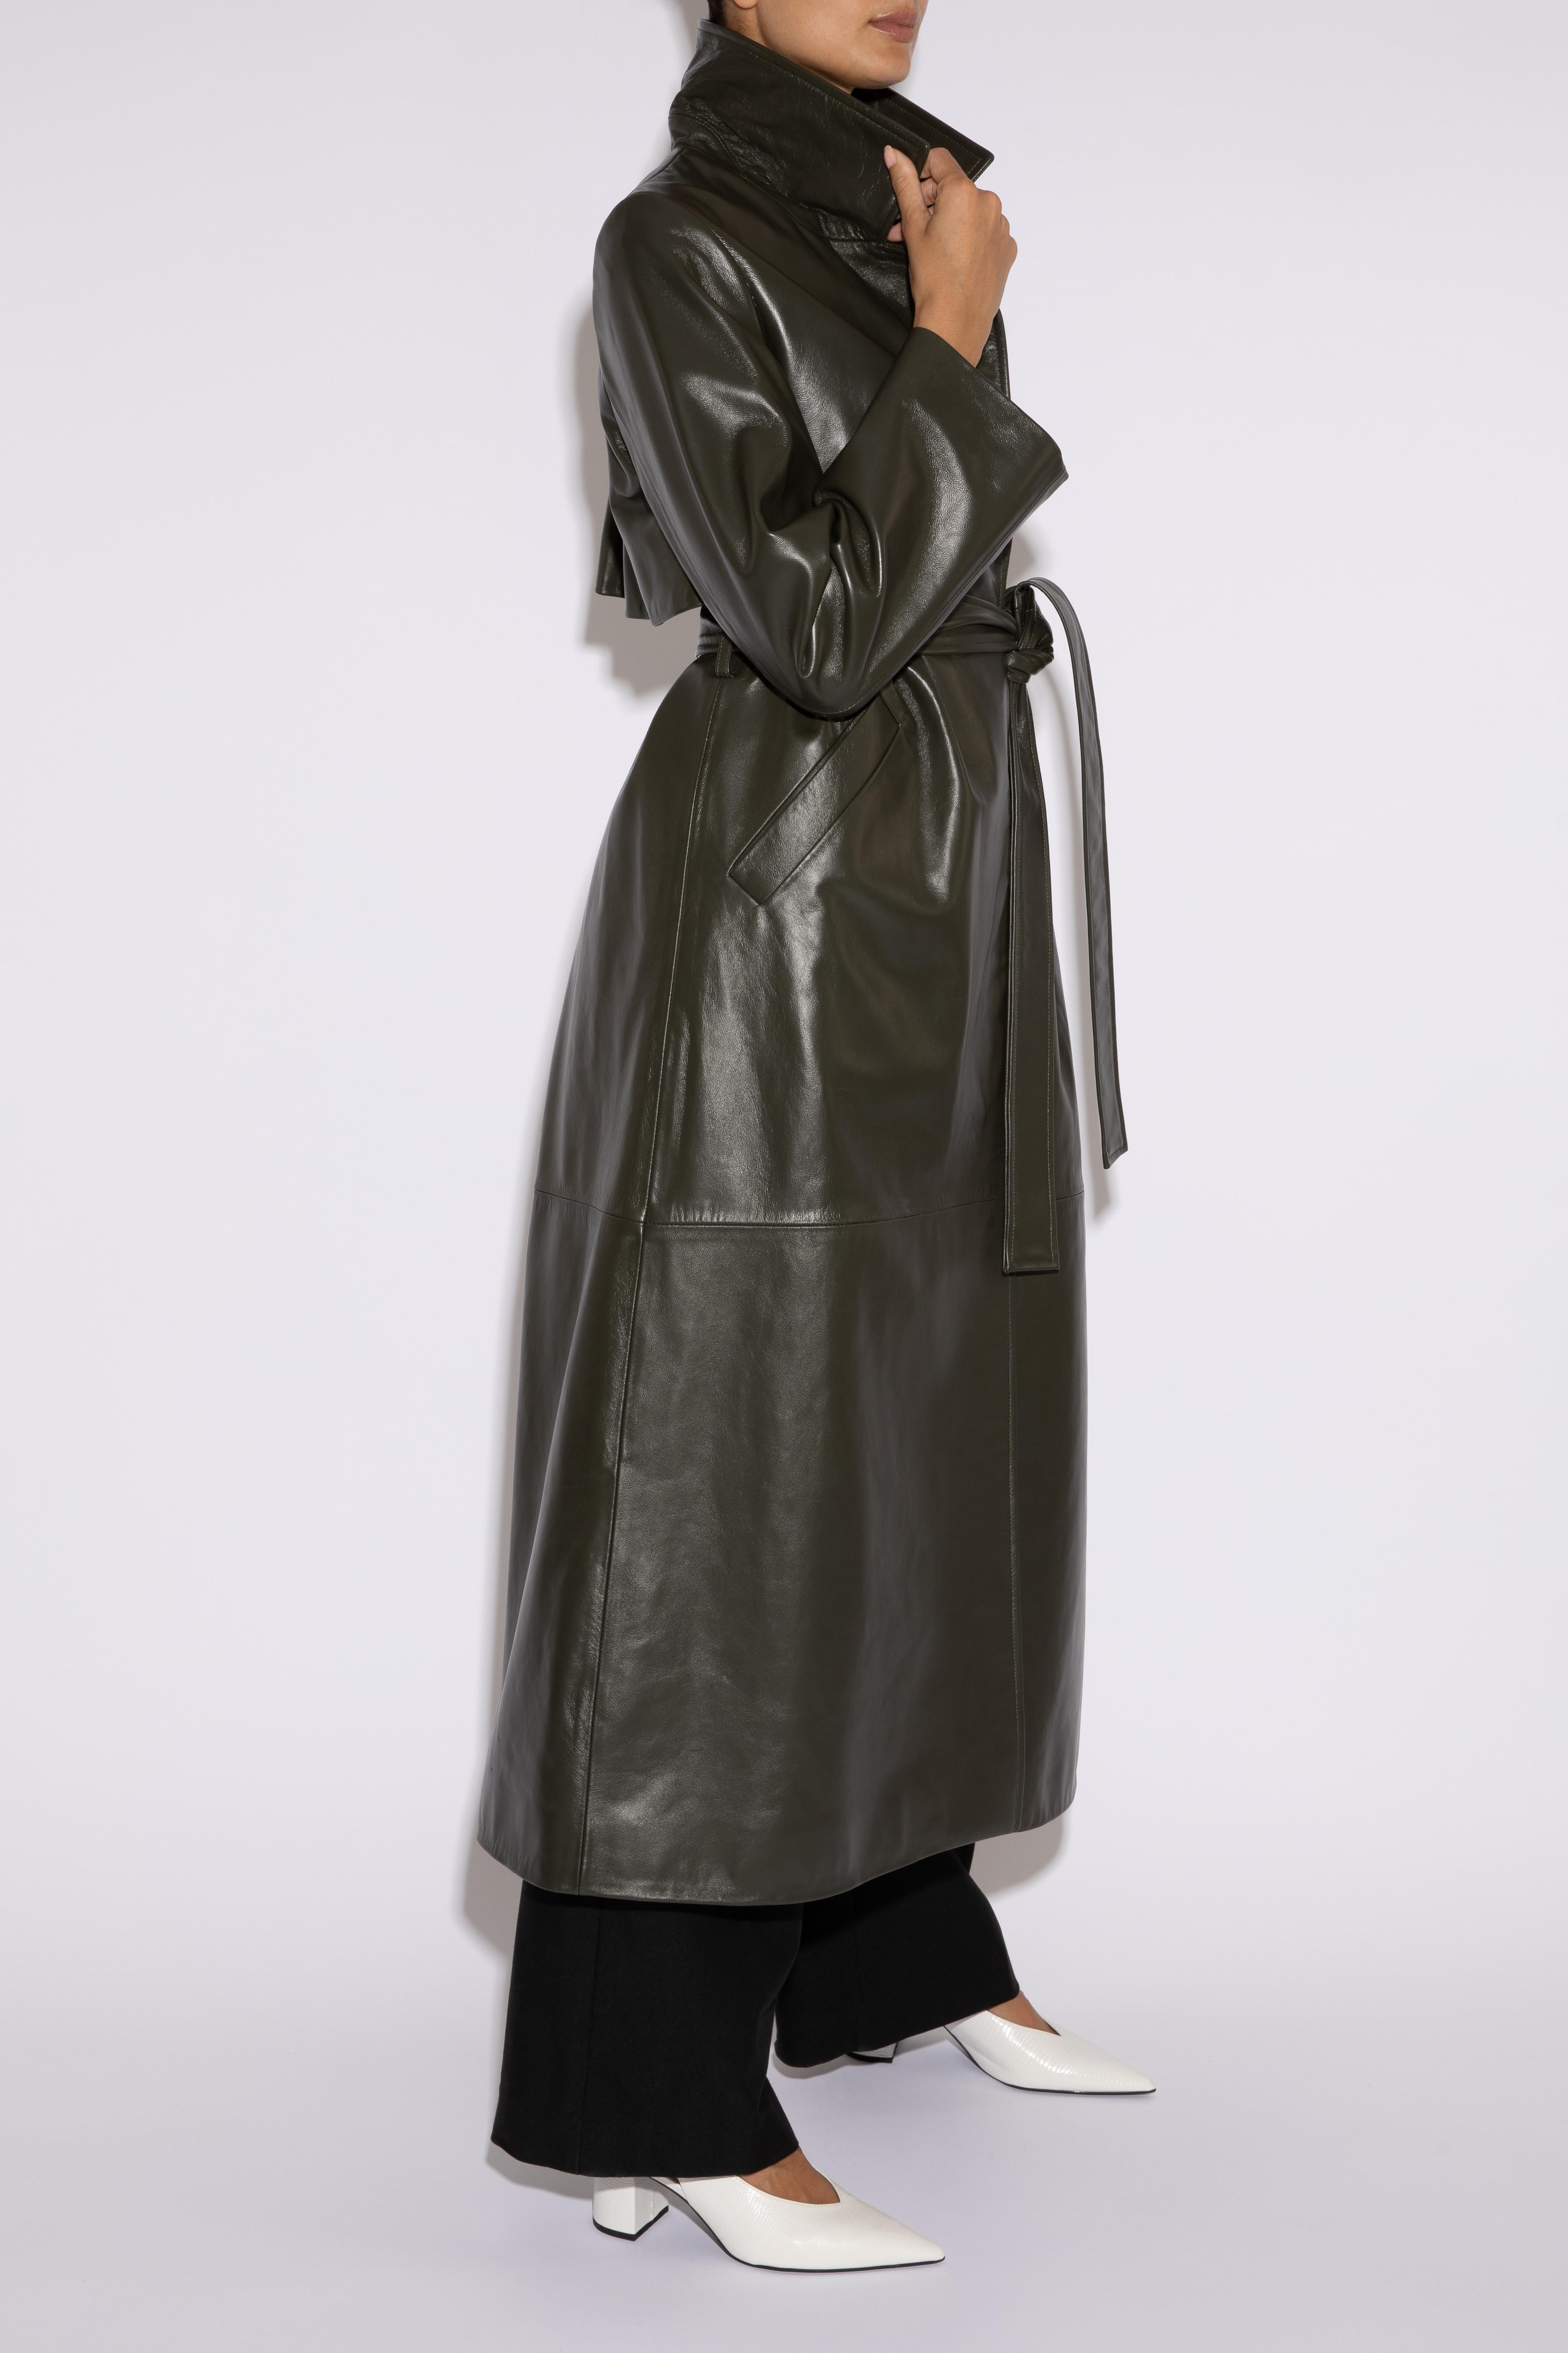 Trench-coat Verheyen London en cuir vert kaki foncé - Taille UK 12 en vente 1